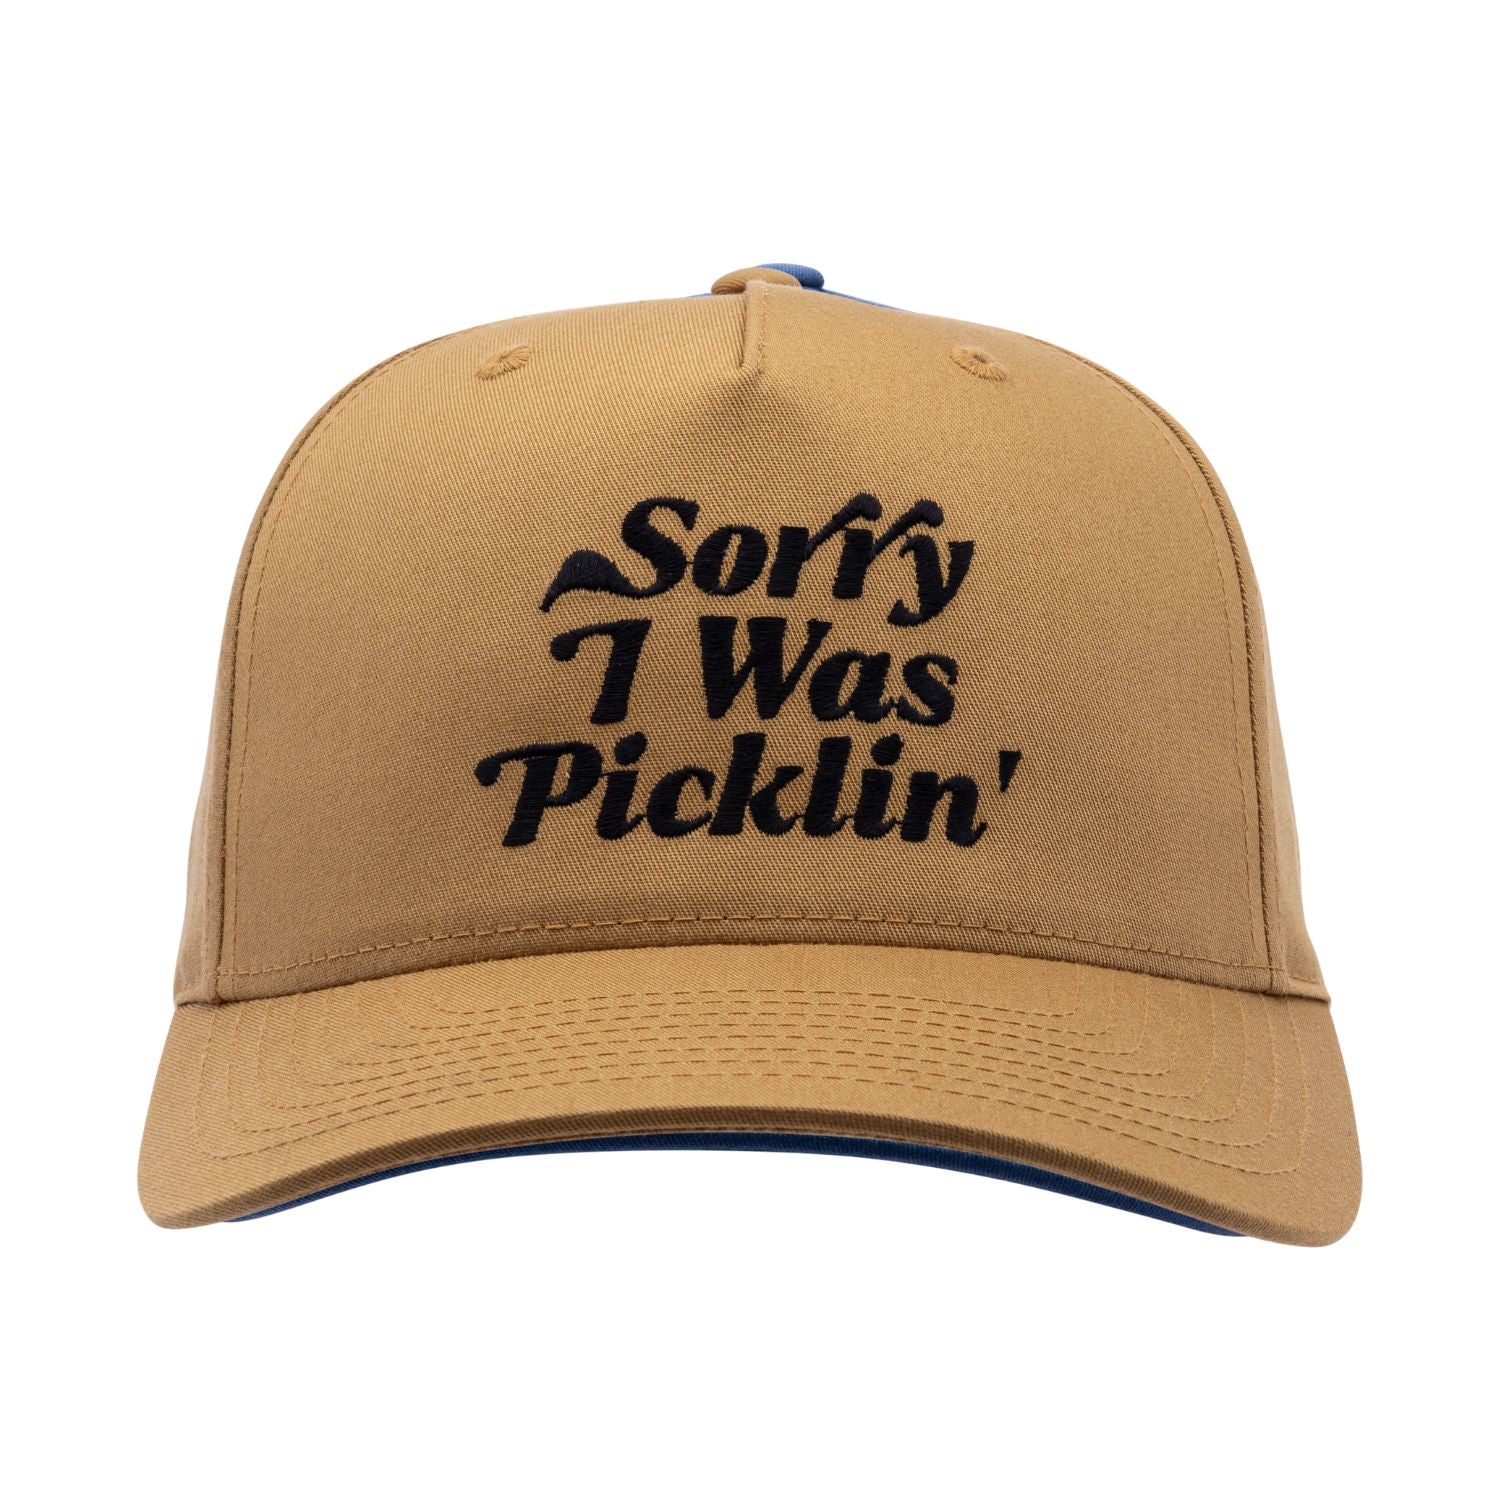 Sorry I was Picklin' - Snapback Hat by Diadem Sports